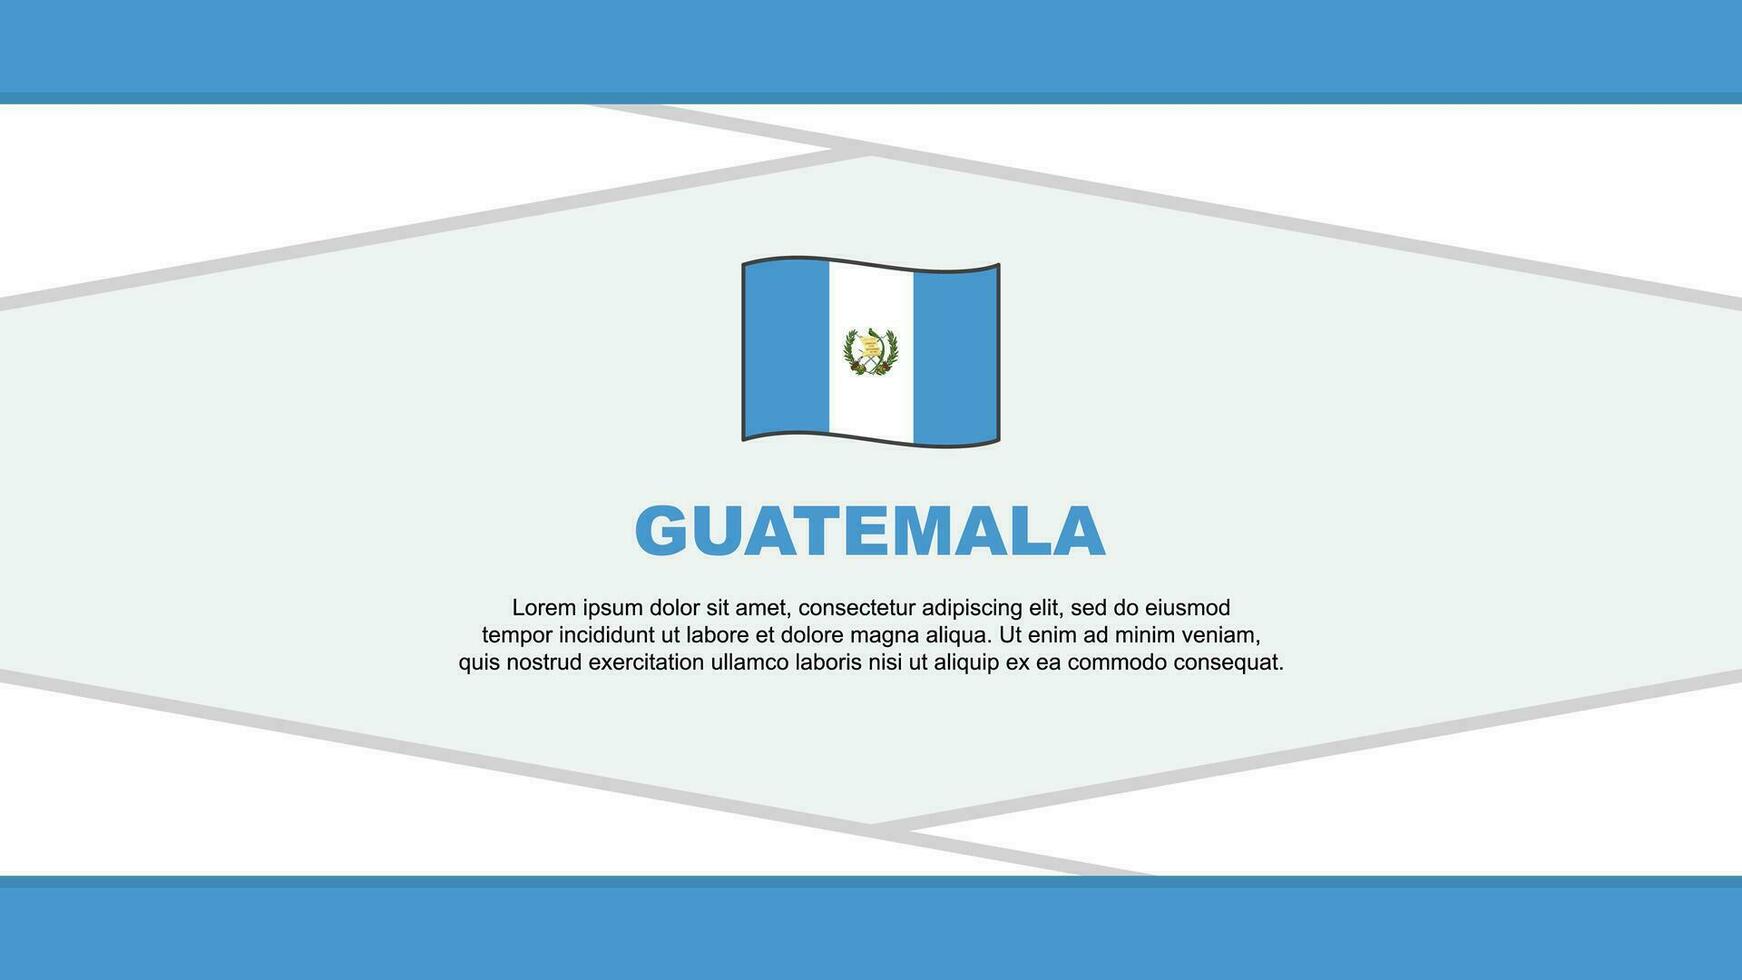 Guatemala Flagge abstrakt Hintergrund Design Vorlage. Guatemala Unabhängigkeit Tag Banner Karikatur Vektor Illustration. Guatemala Vektor